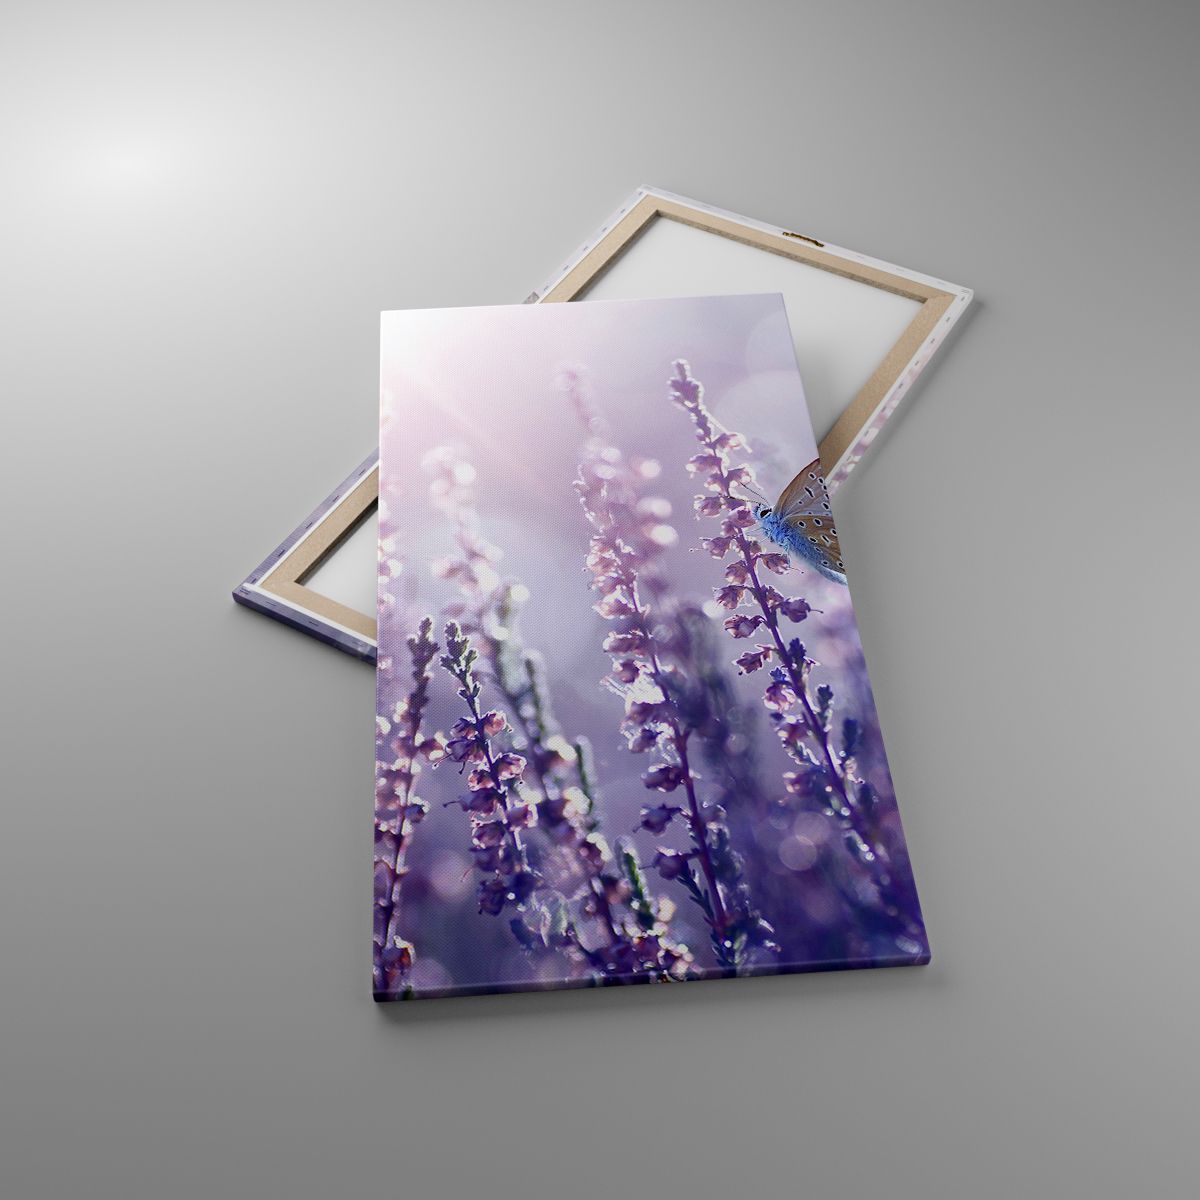 Leinwandbild Schmetterling, Leinwandbild Wiese, Leinwandbild Blume, Leinwandbild Natur, Leinwandbild Violette Farben